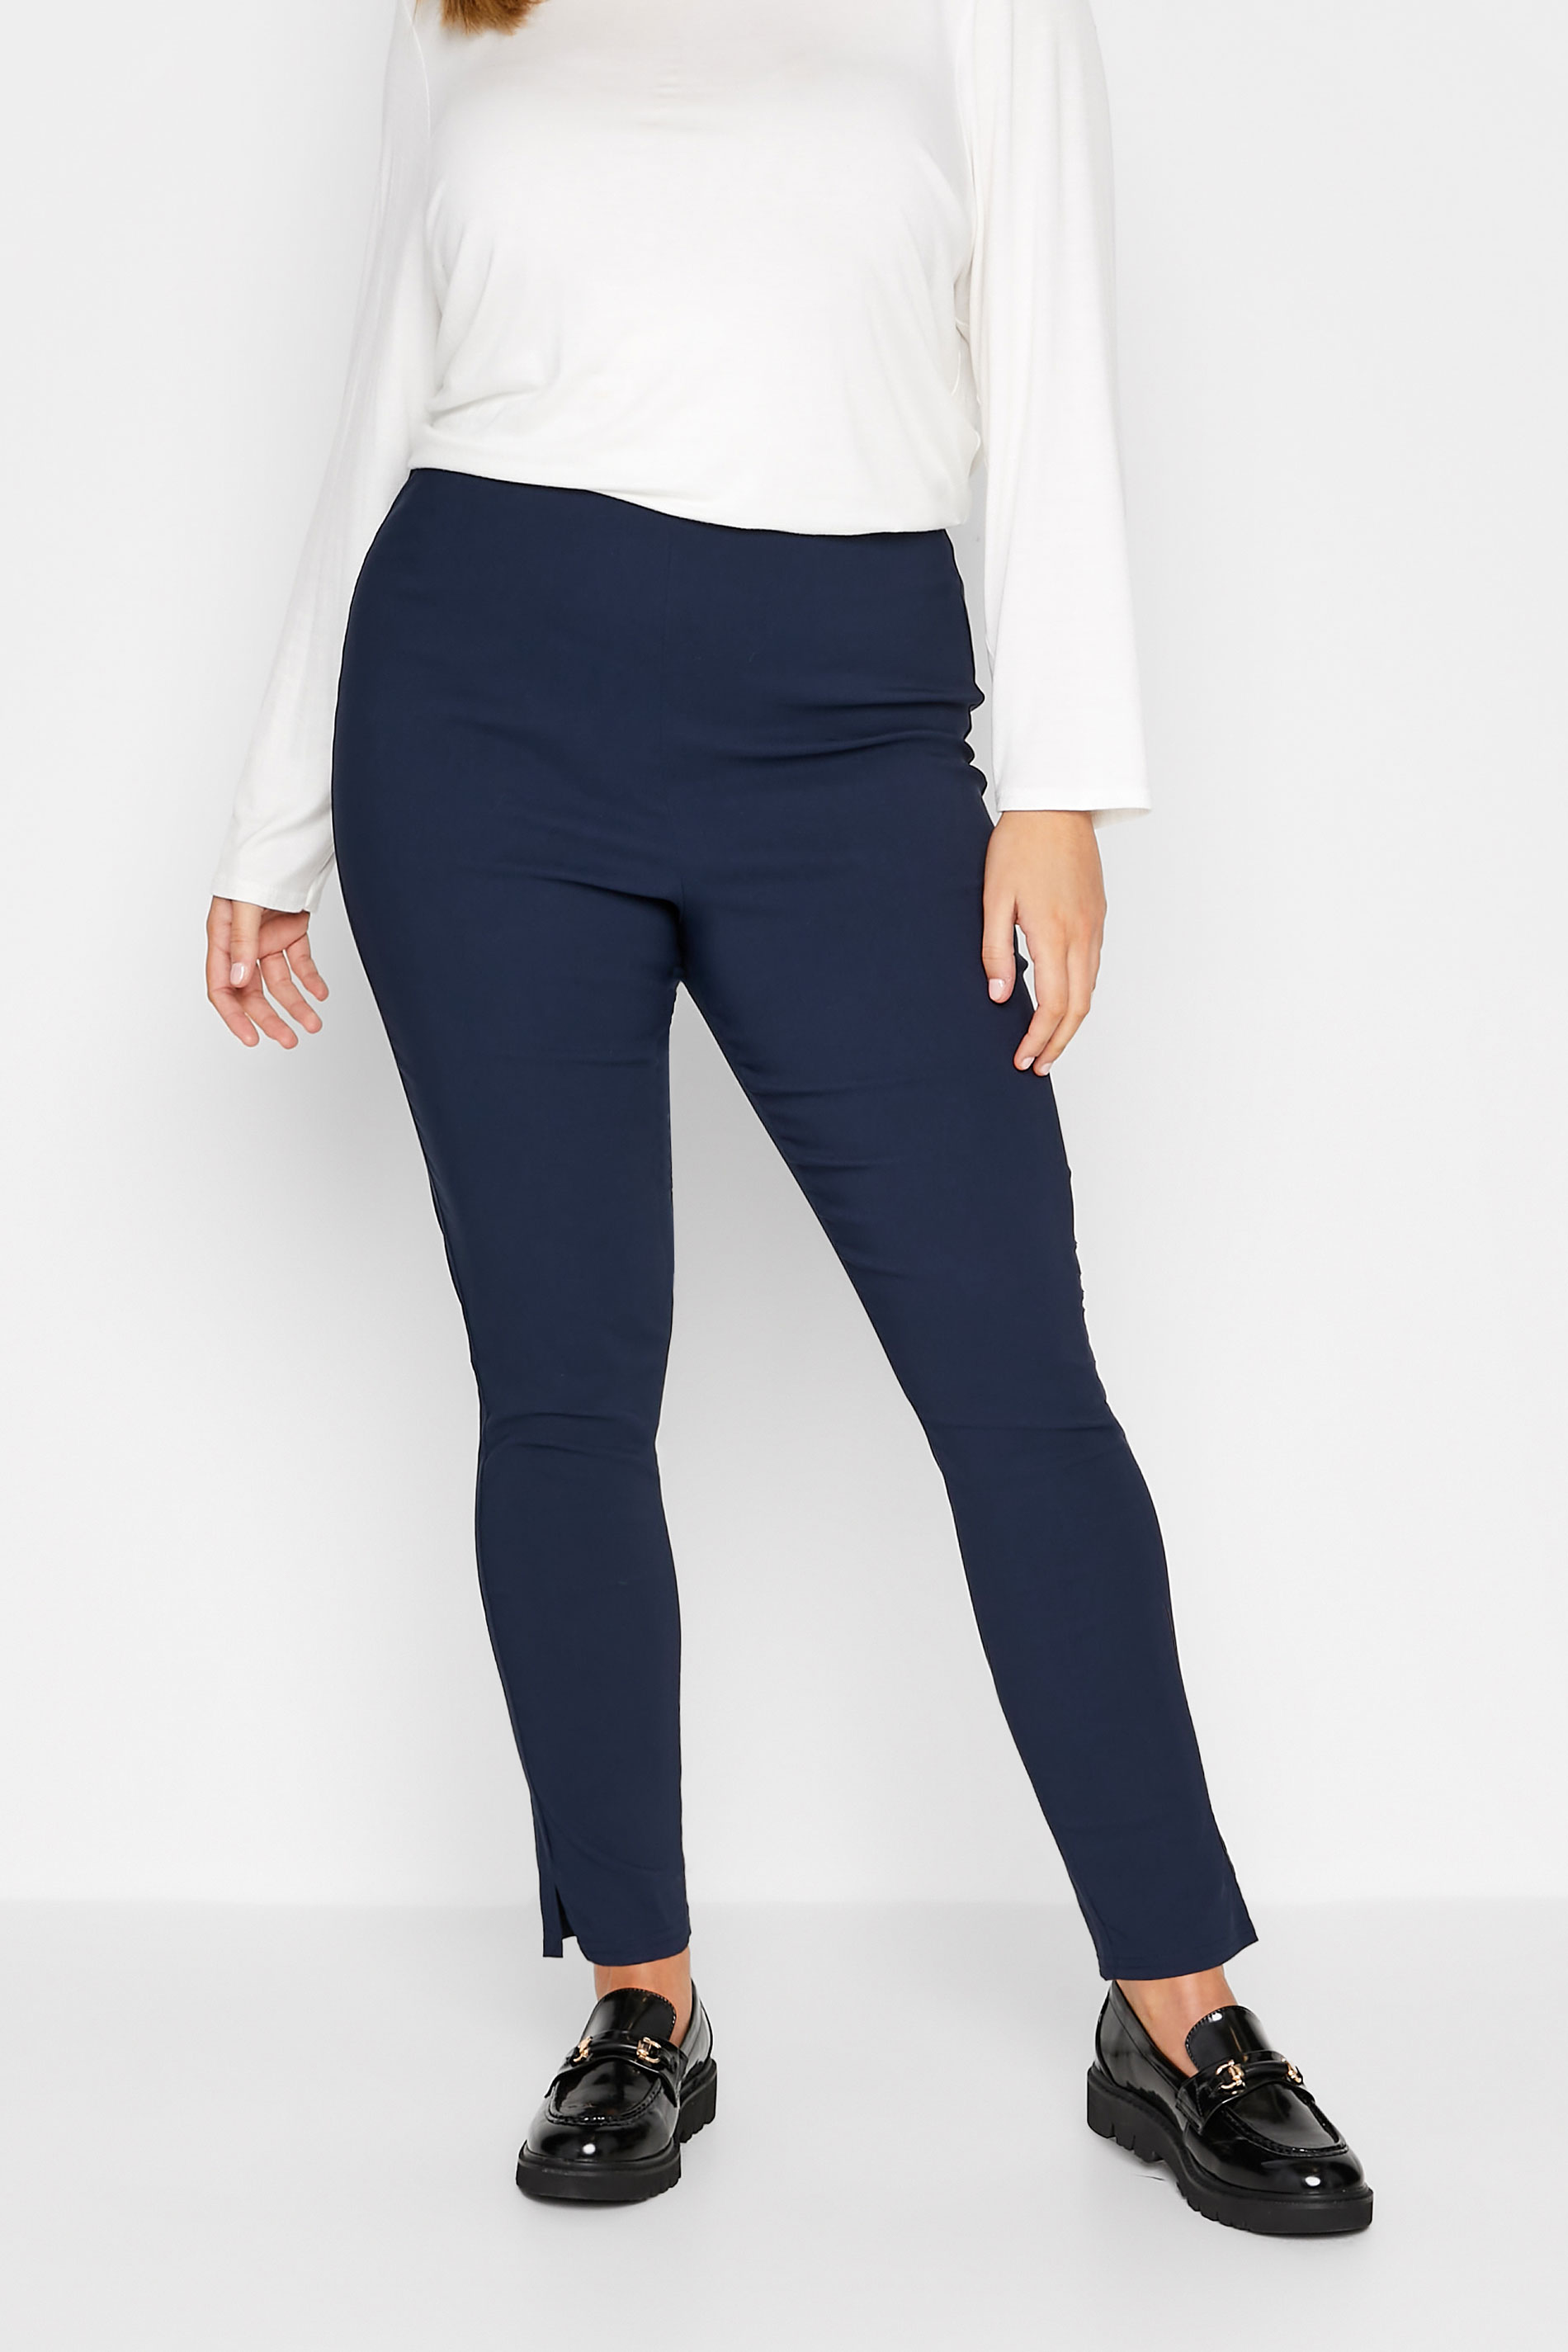 NEW Womens Slim Leg Pant  CL953LL  Work Smart Uniforms Australia  Buy  Online